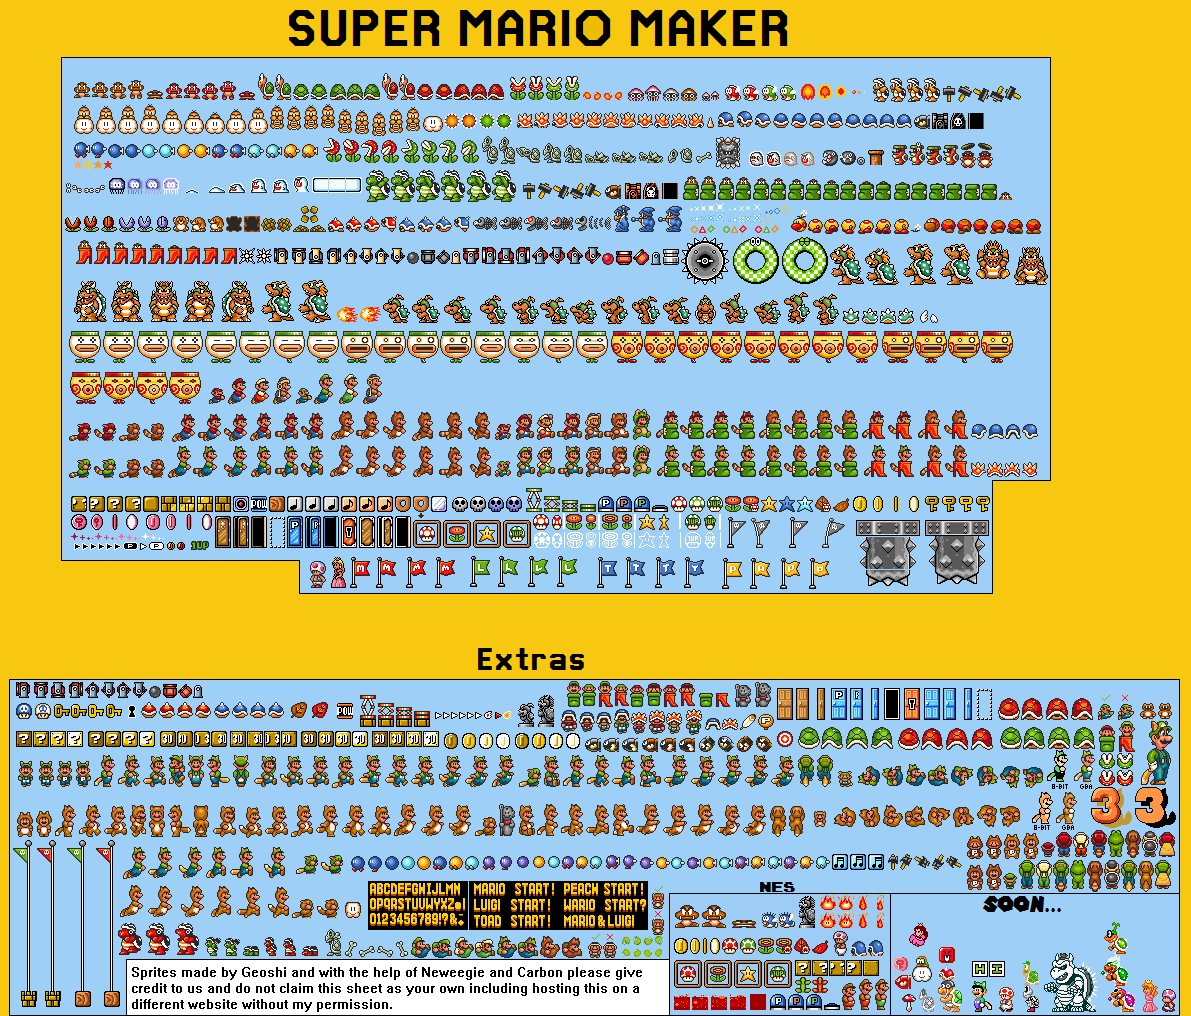 Super mario sprites. Super Mario Bros 3 NES Sprites. Super Mario Bros 3 Mario Sprite. Super Mario 3 Sprites. Супер Марио БРОС 3 спрайты.